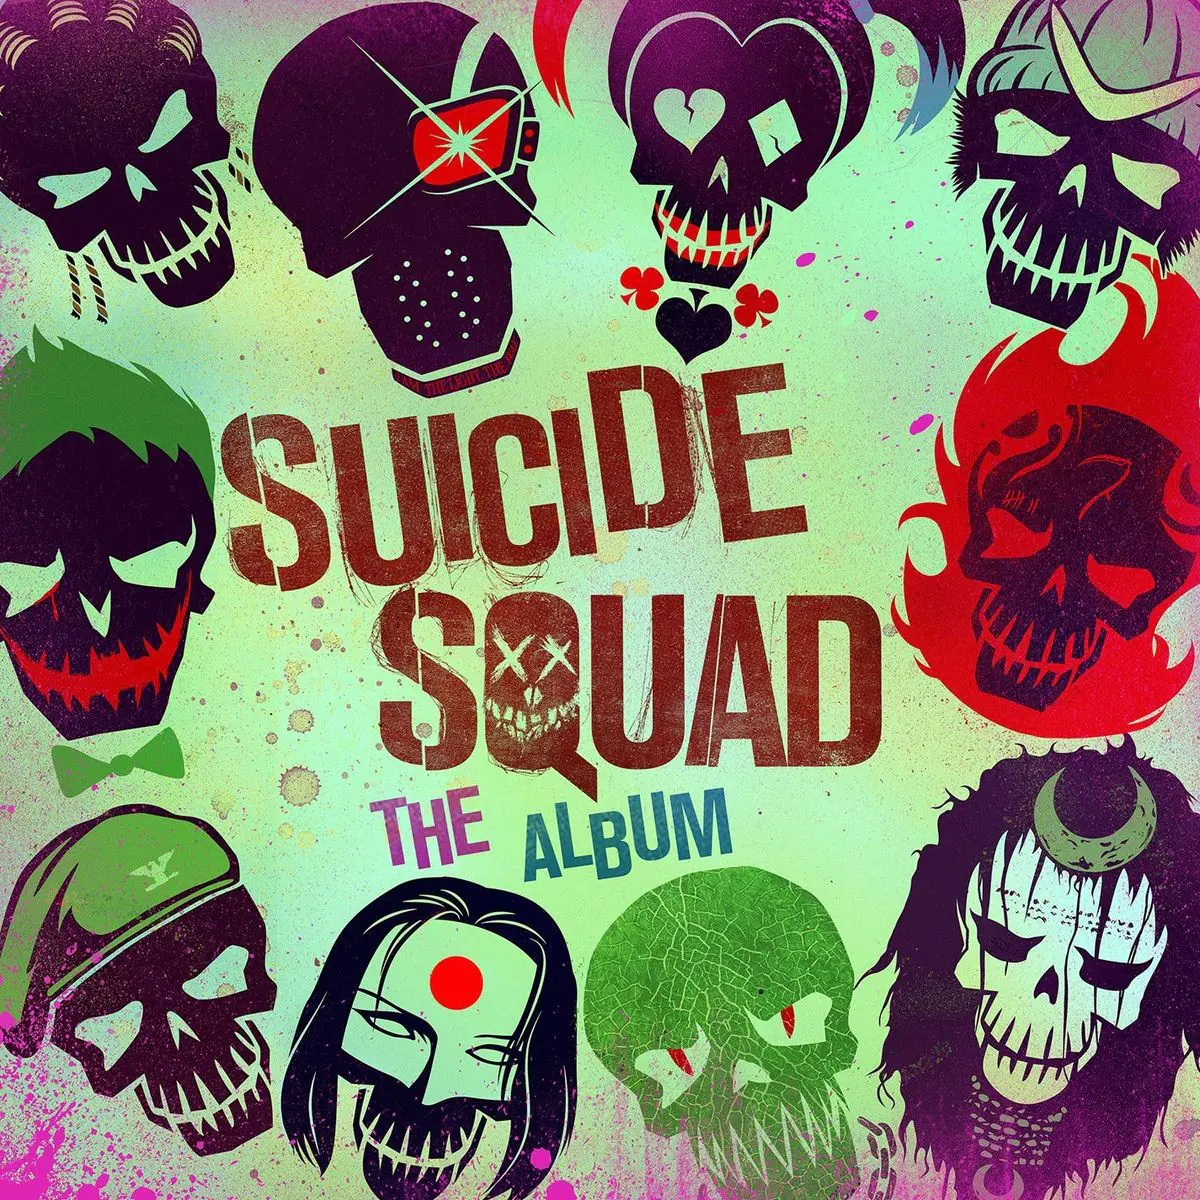 movie soundtracks, Kehlani’s “Gangsta” was an apt description of Suicide Squad (2016)